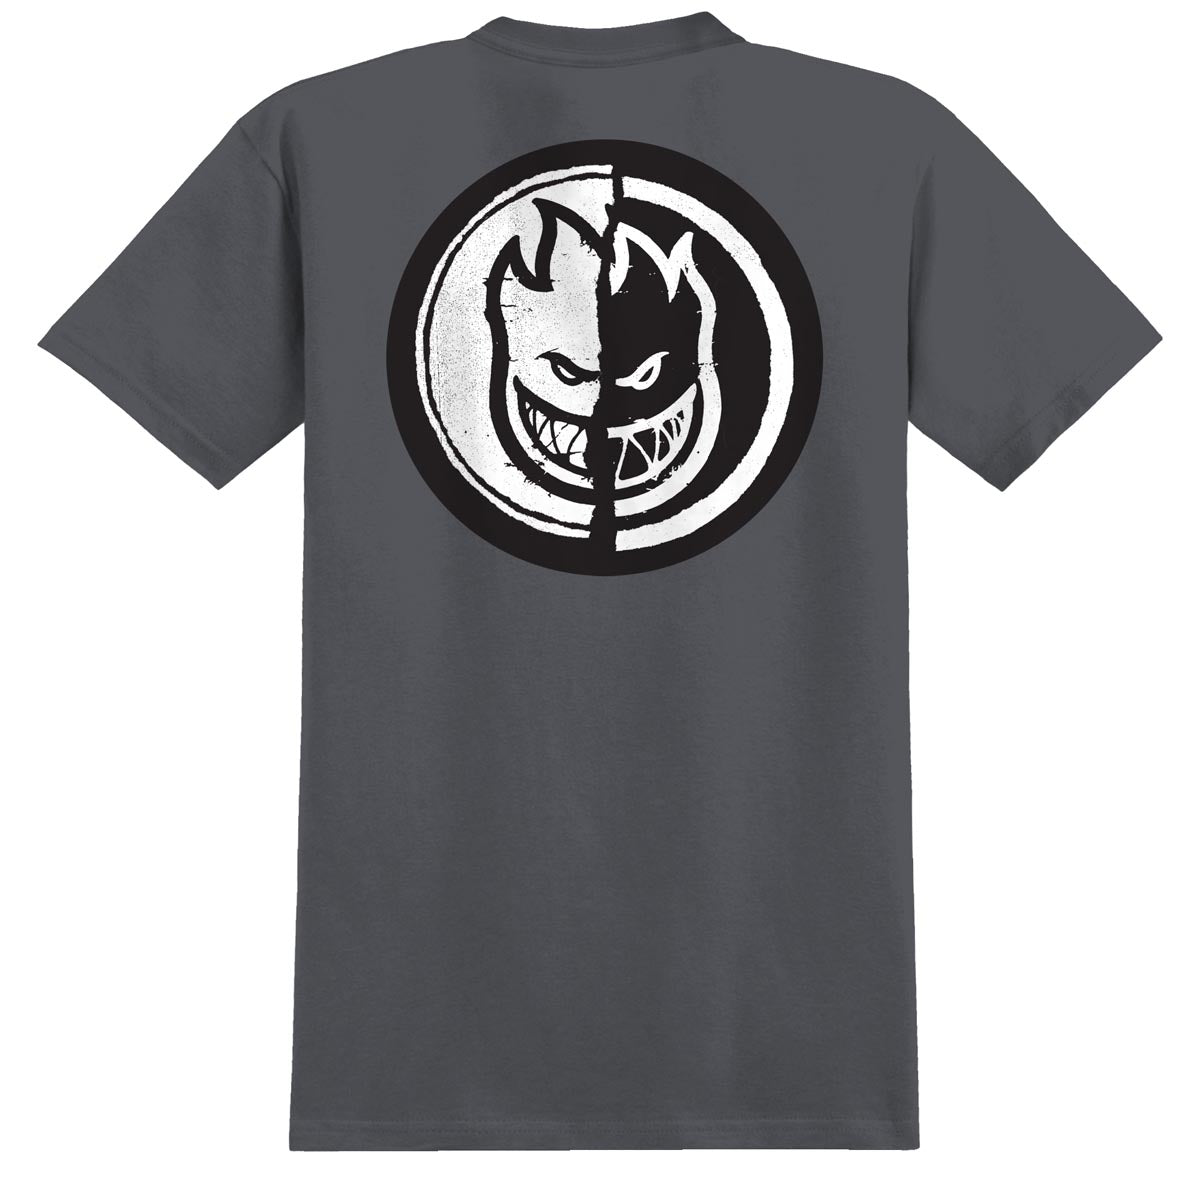 Spitfire Yin Yang T-Shirt - Charcoal/Black/White image 1